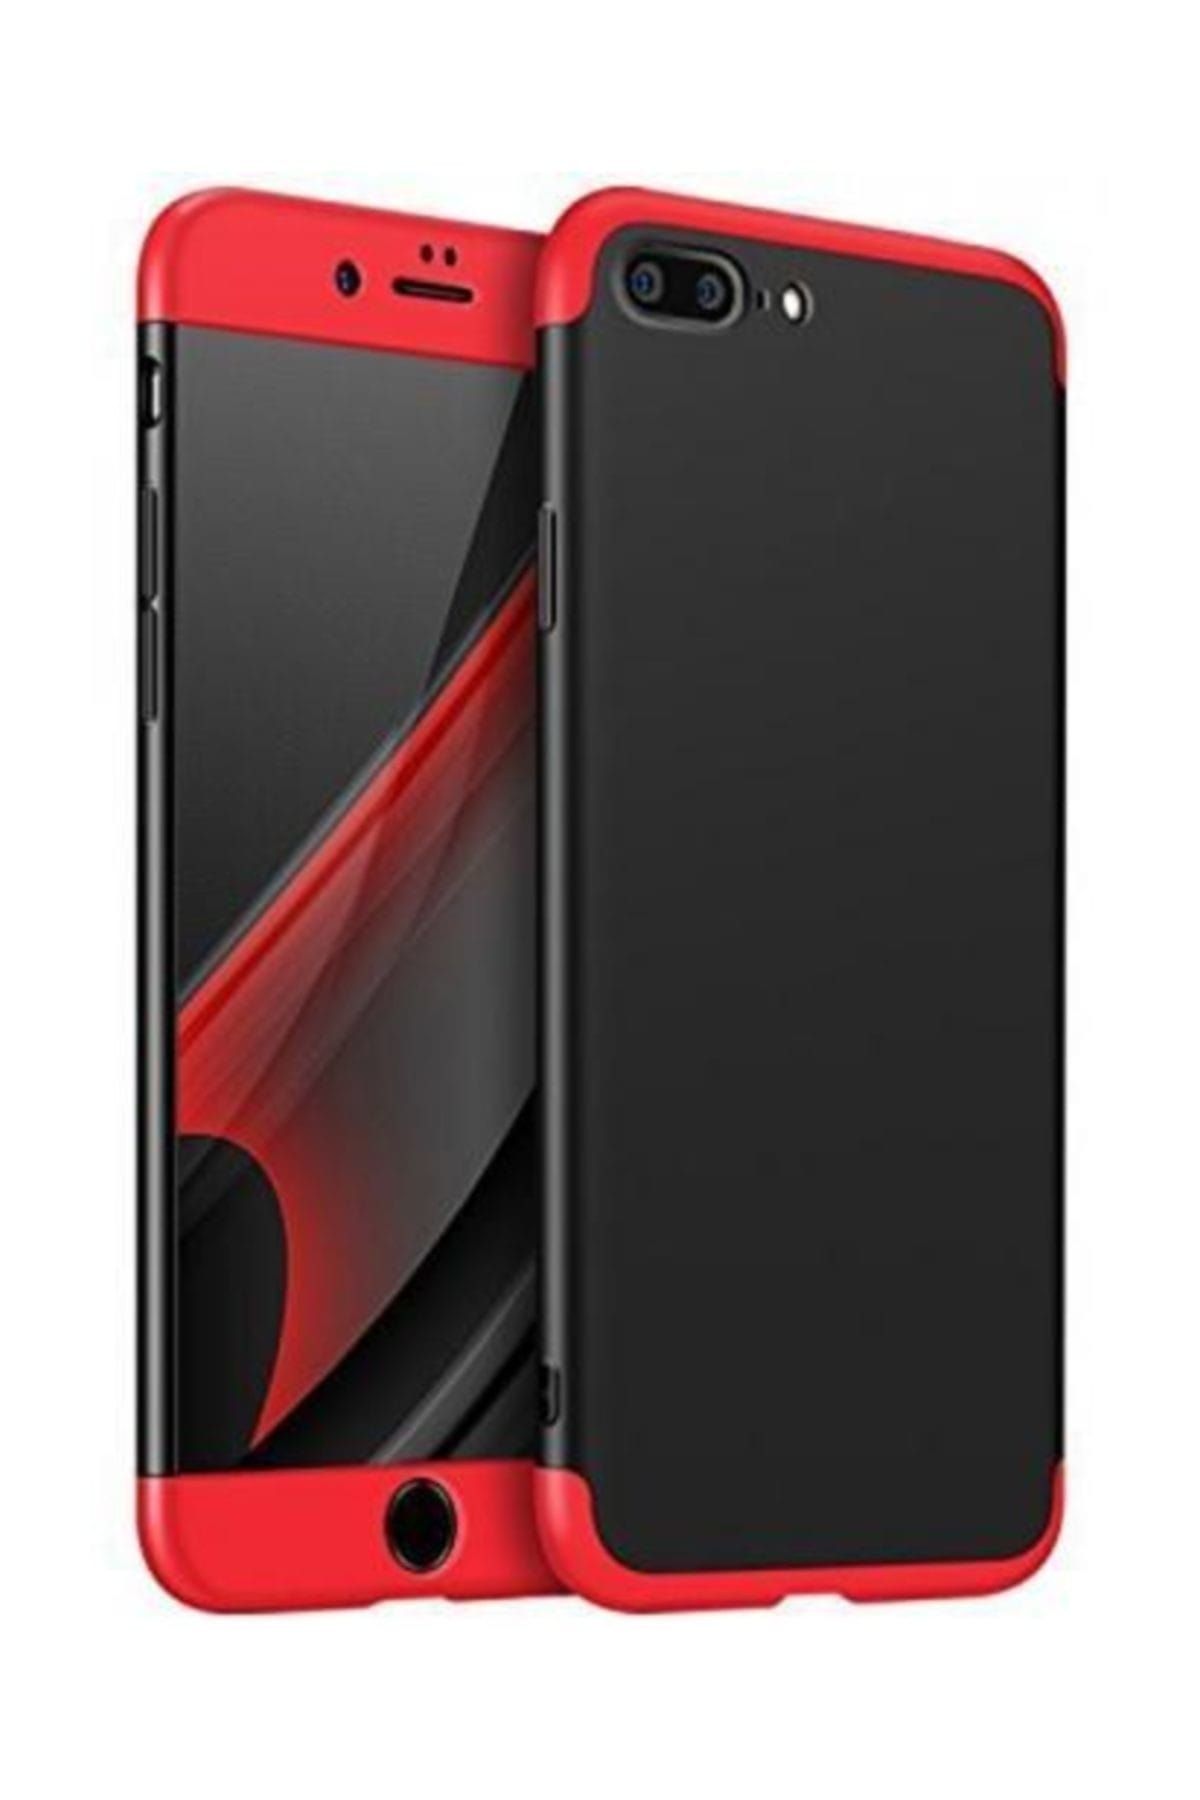 Cepsesuar Apple iPhone 7 Plus Kılıf 360 Tam Koruma 3 Parça Ays Kapak - Kırmızı Siyah